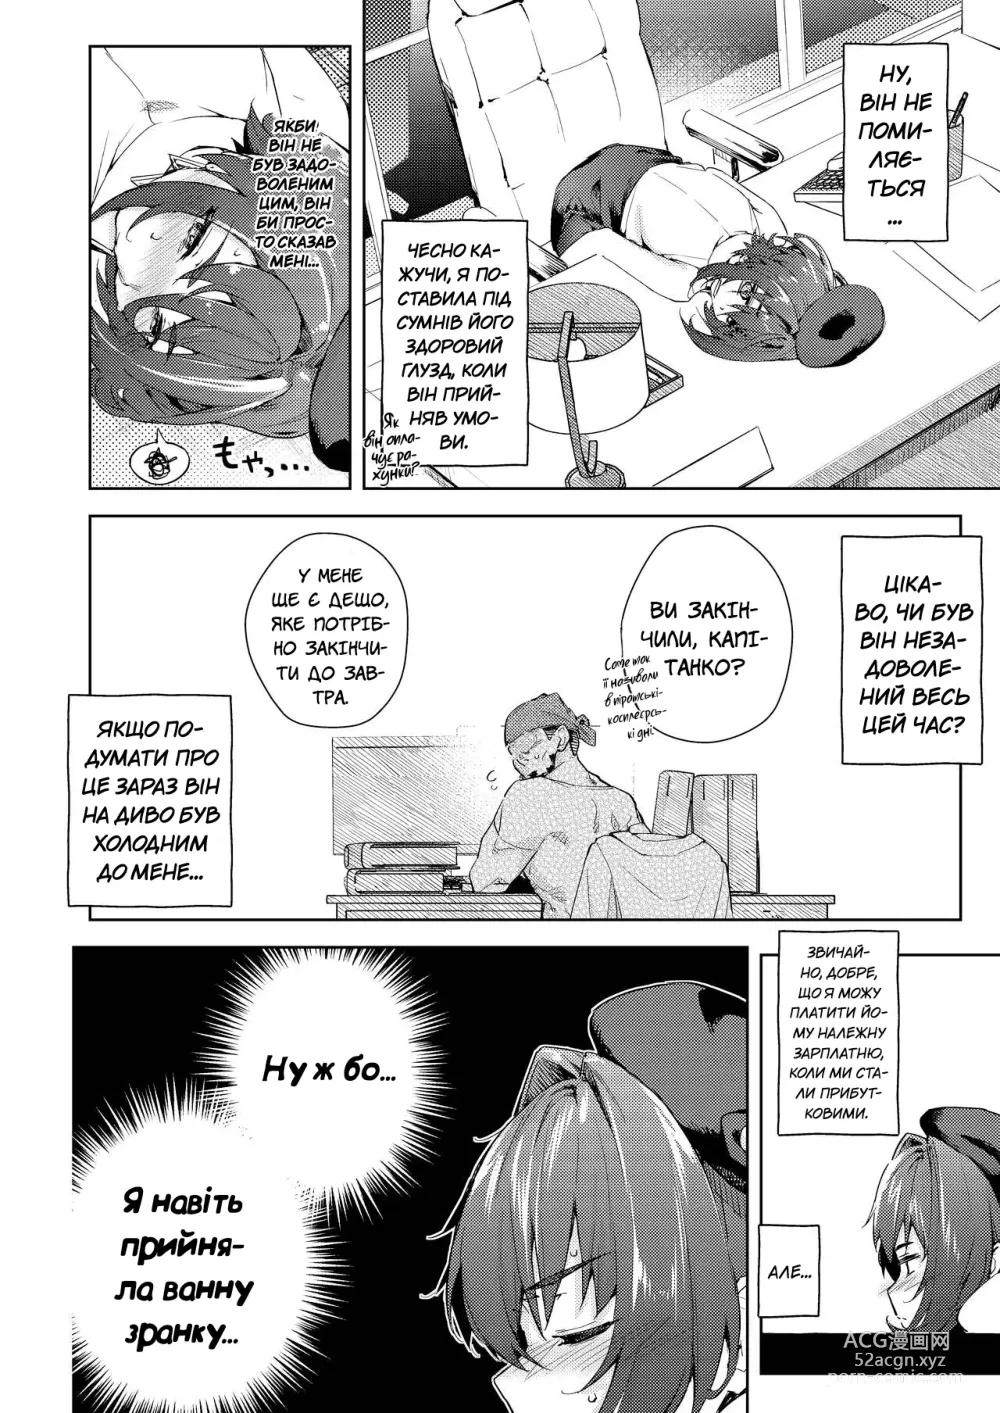 Page 5 of doujinshi Чи можу я заплатити своїми грудьми